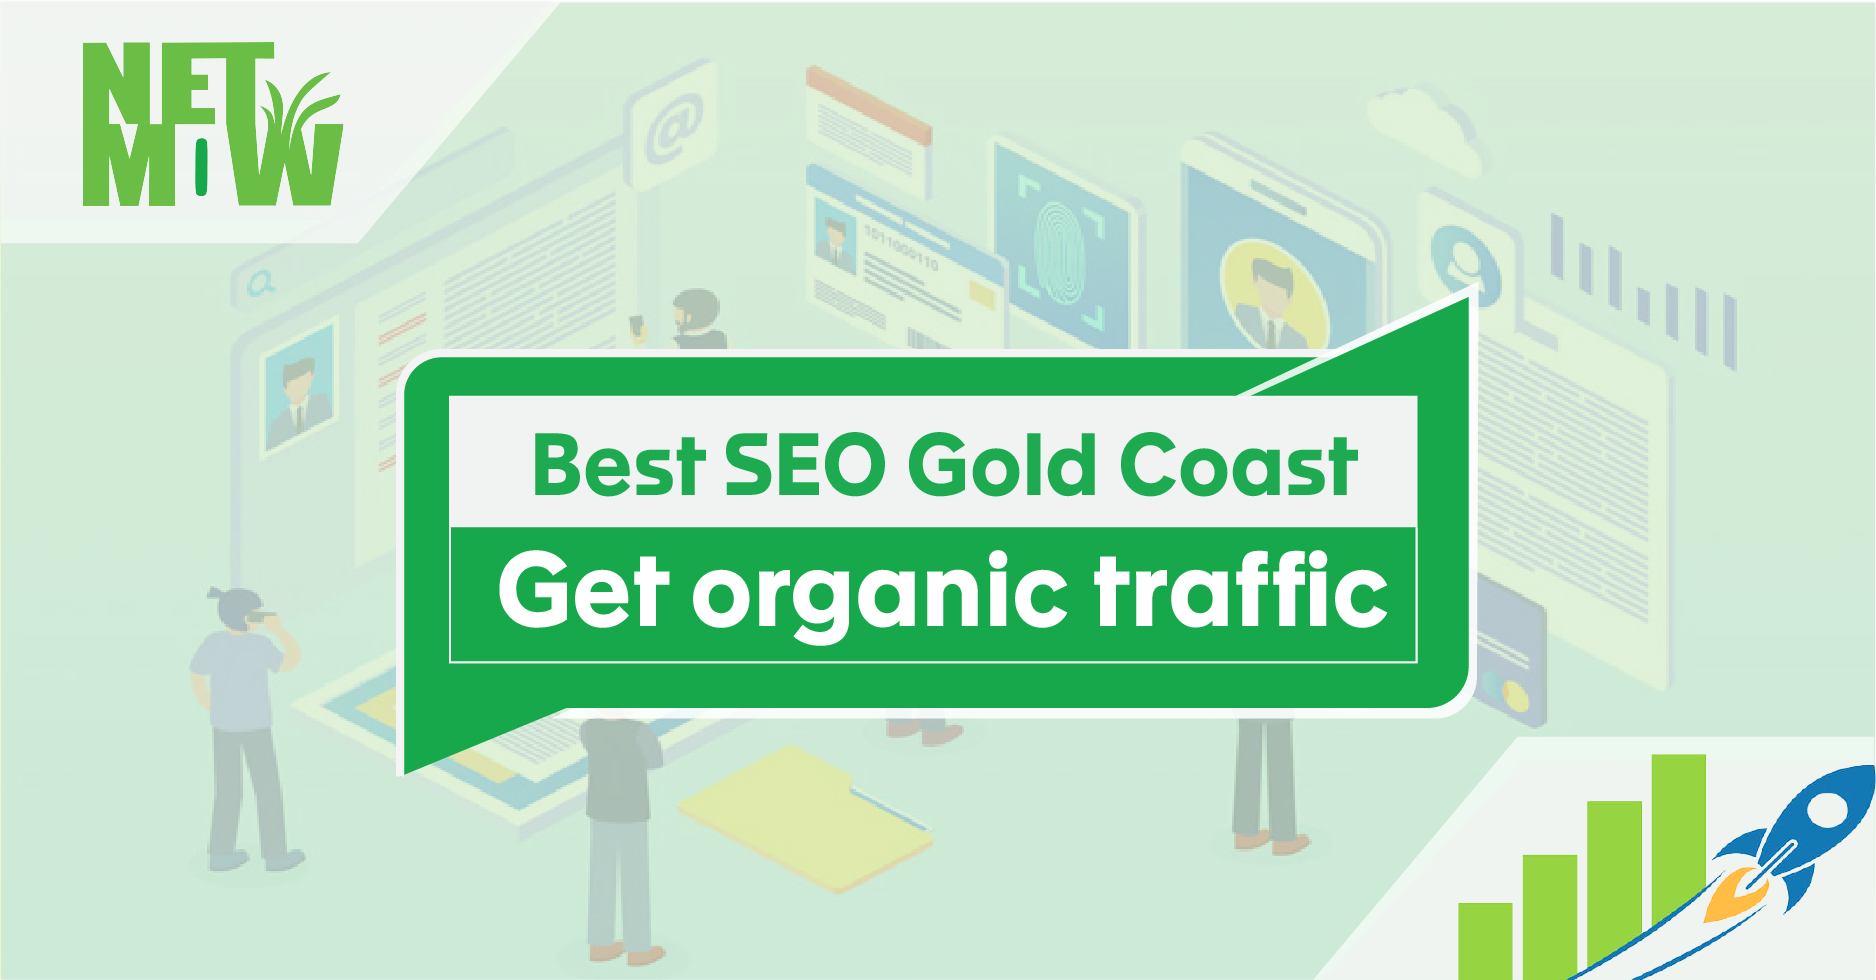 Best SEO Gold Coast: Get Organic Traffic